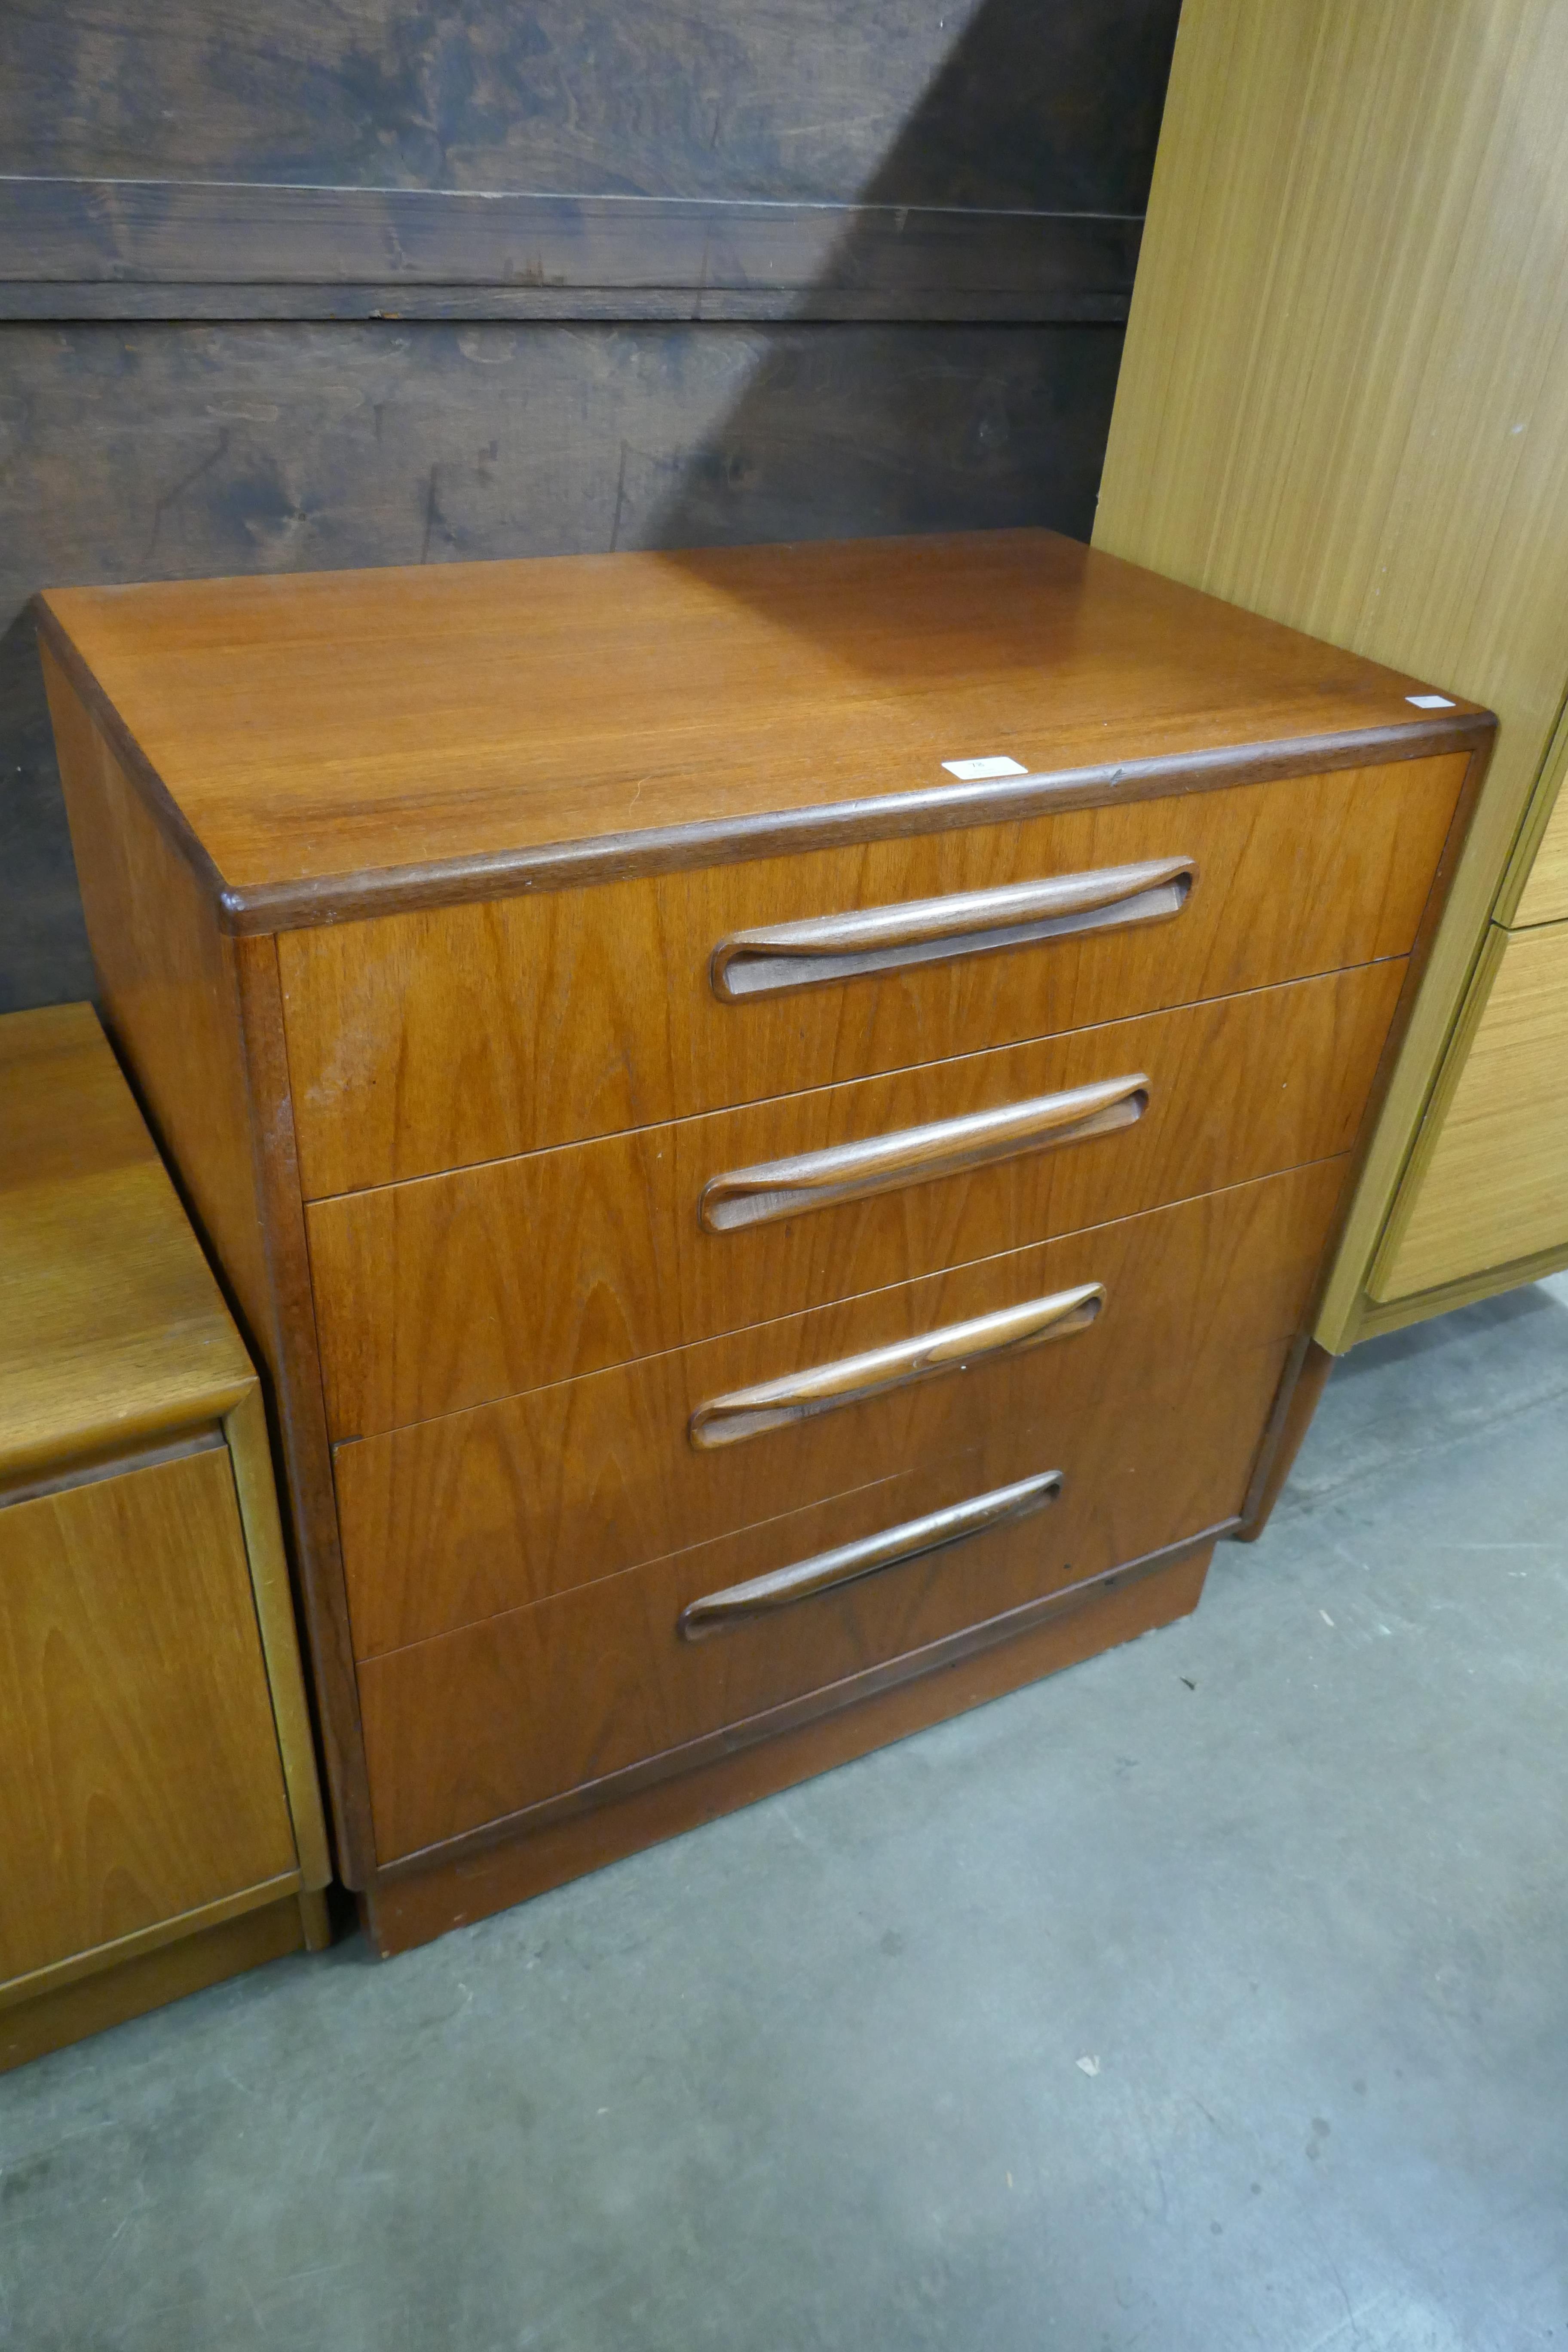 A G-Plan Fresco teak chest of drawers